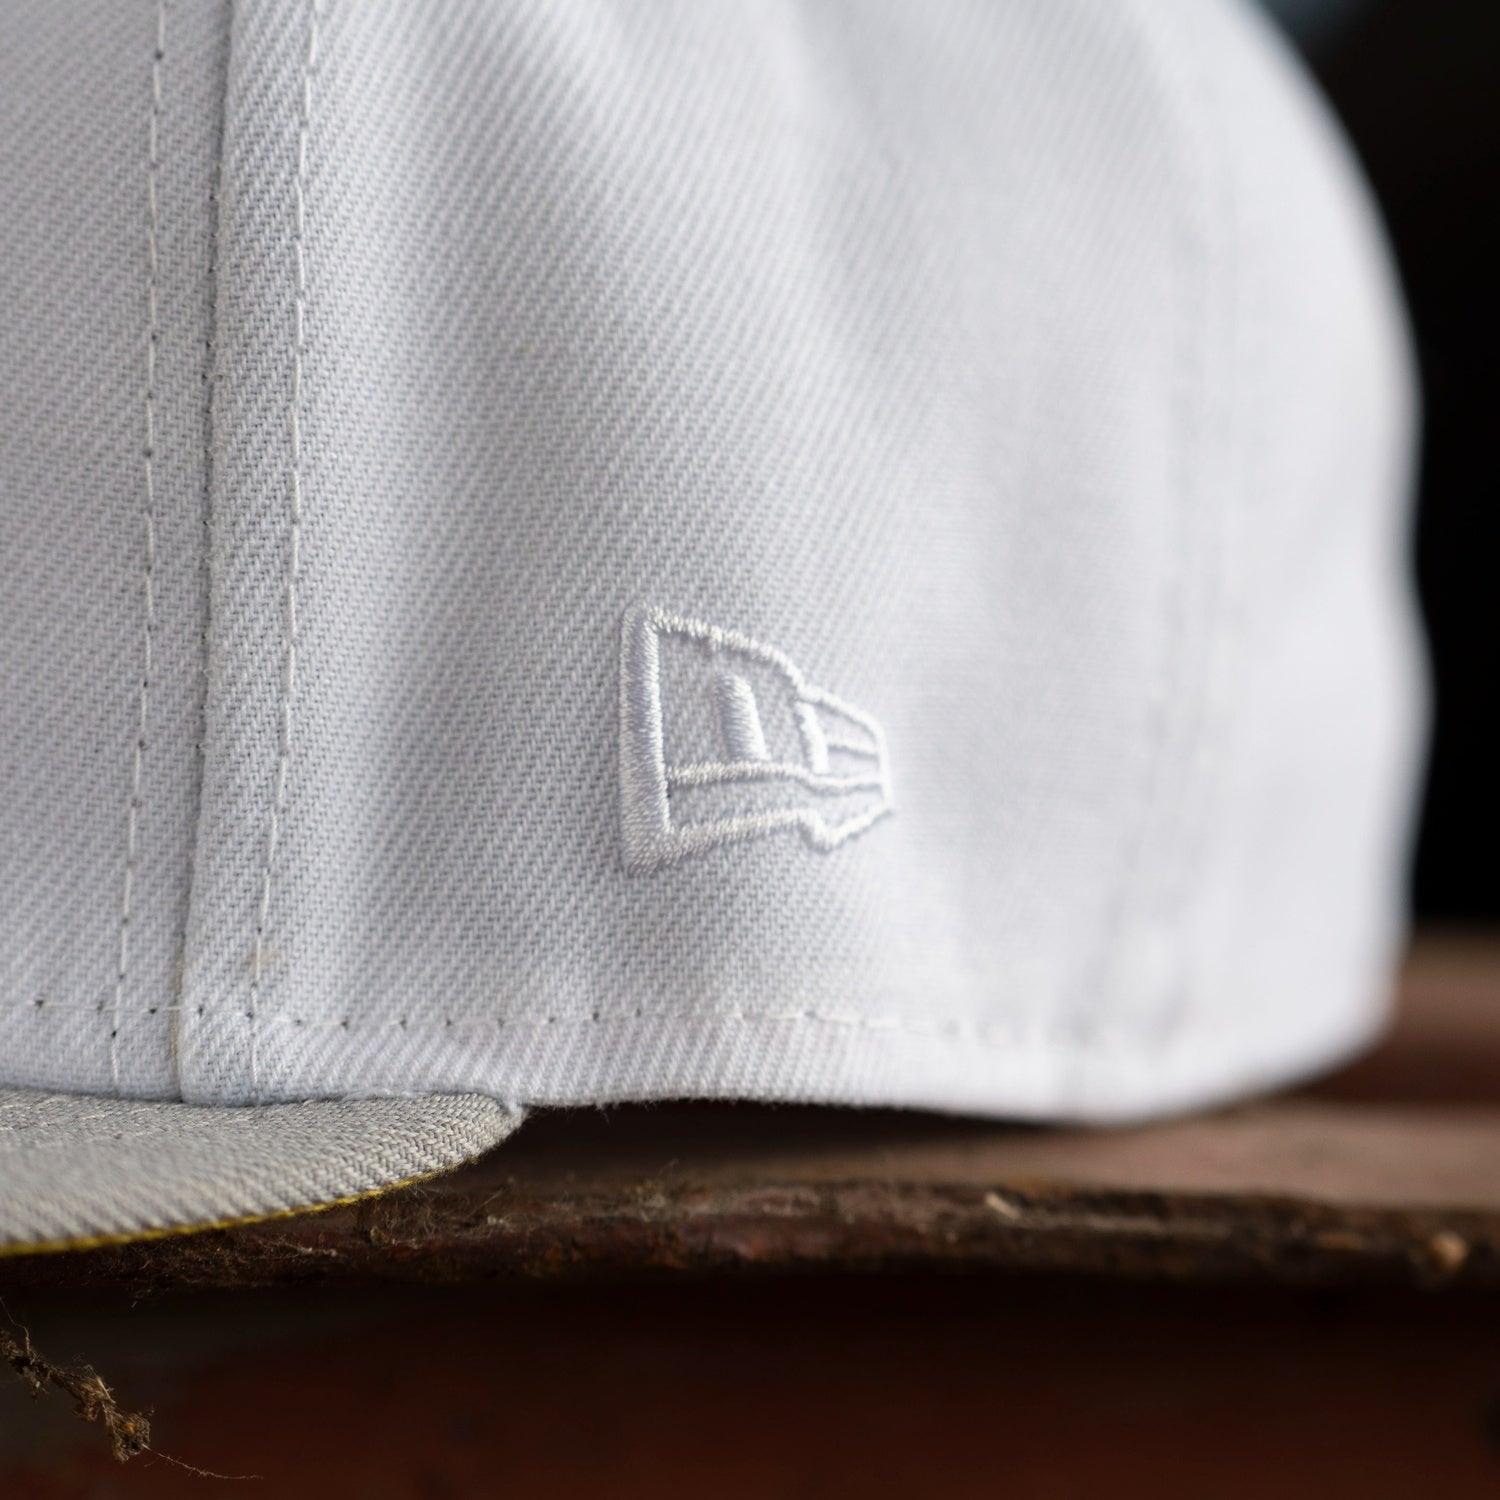 Seattle Mariners Hats & Caps – New Era Cap